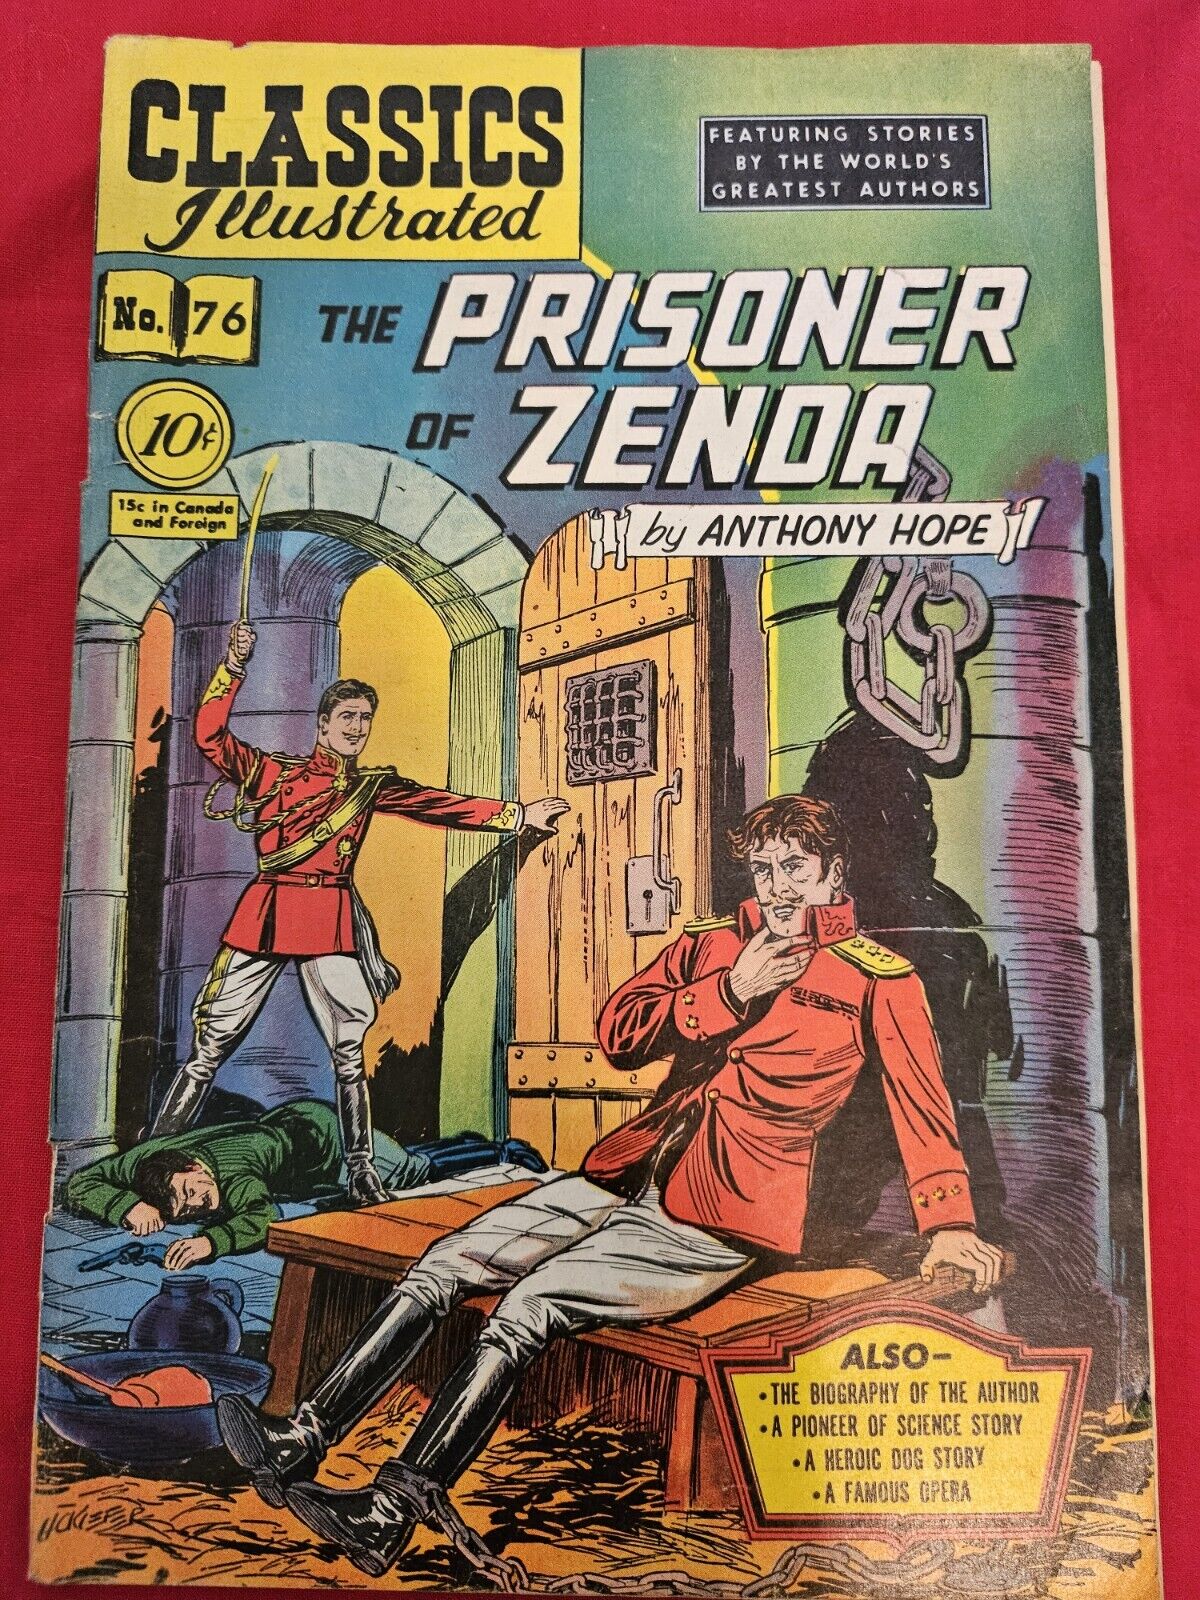 #1 Classics Illustrated #76 Prisoner of Zenda HRN 75 gd+ by Anthony Hope 1950